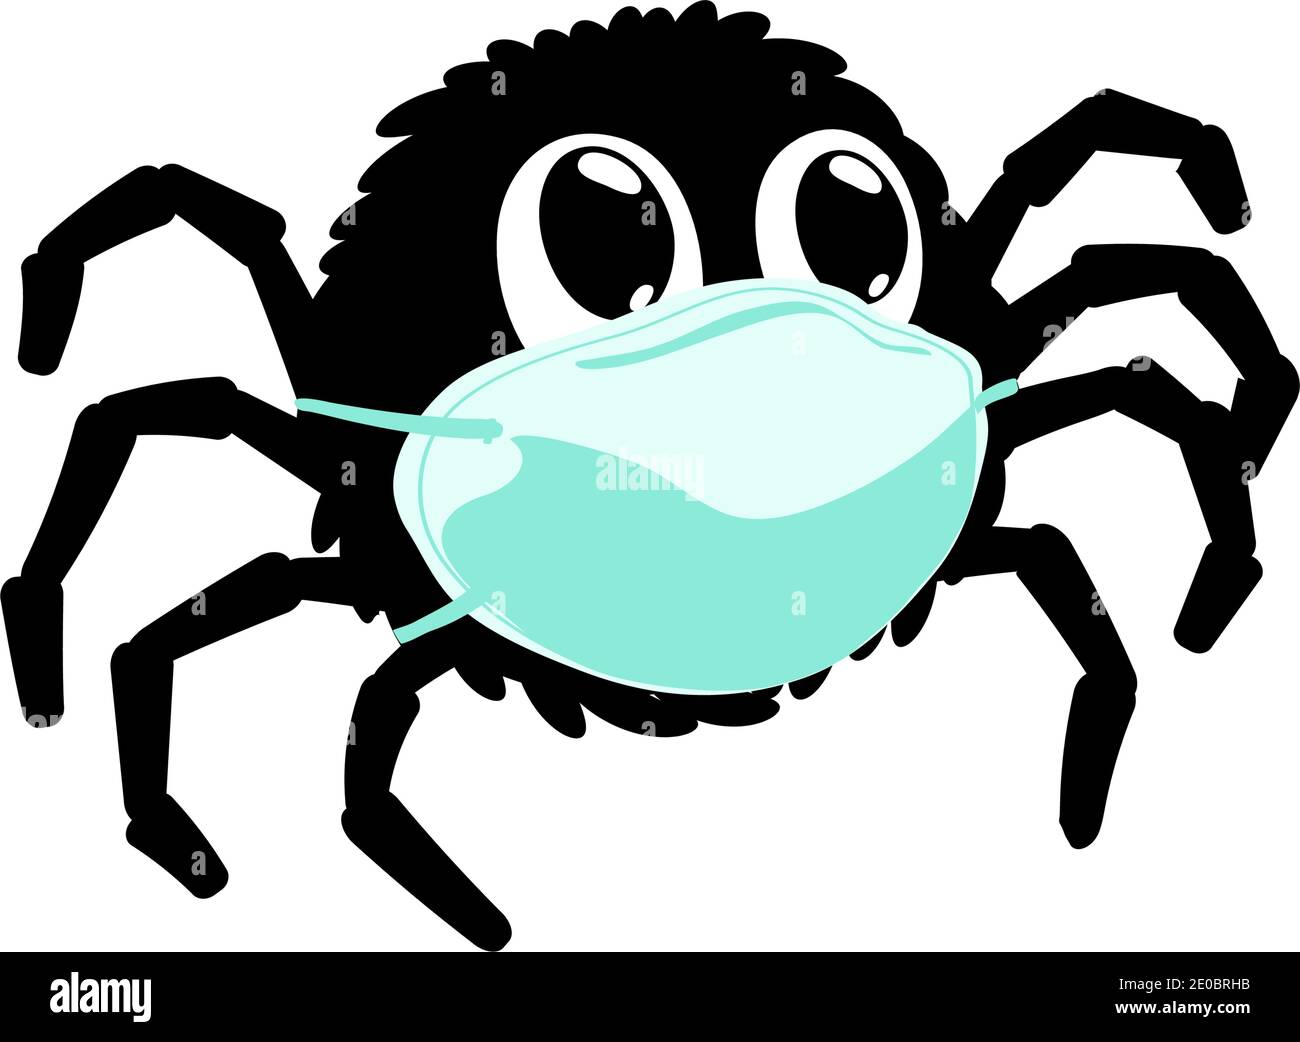 Lustige Spinne in einer medizinischen Maske. vektor-Illustration.  Cartoon-Charakter Angst vor Coronavirus Pandemie. Quarantäne zu stoppen  covid 19. Kinder drucken Design Stock-Vektorgrafik - Alamy